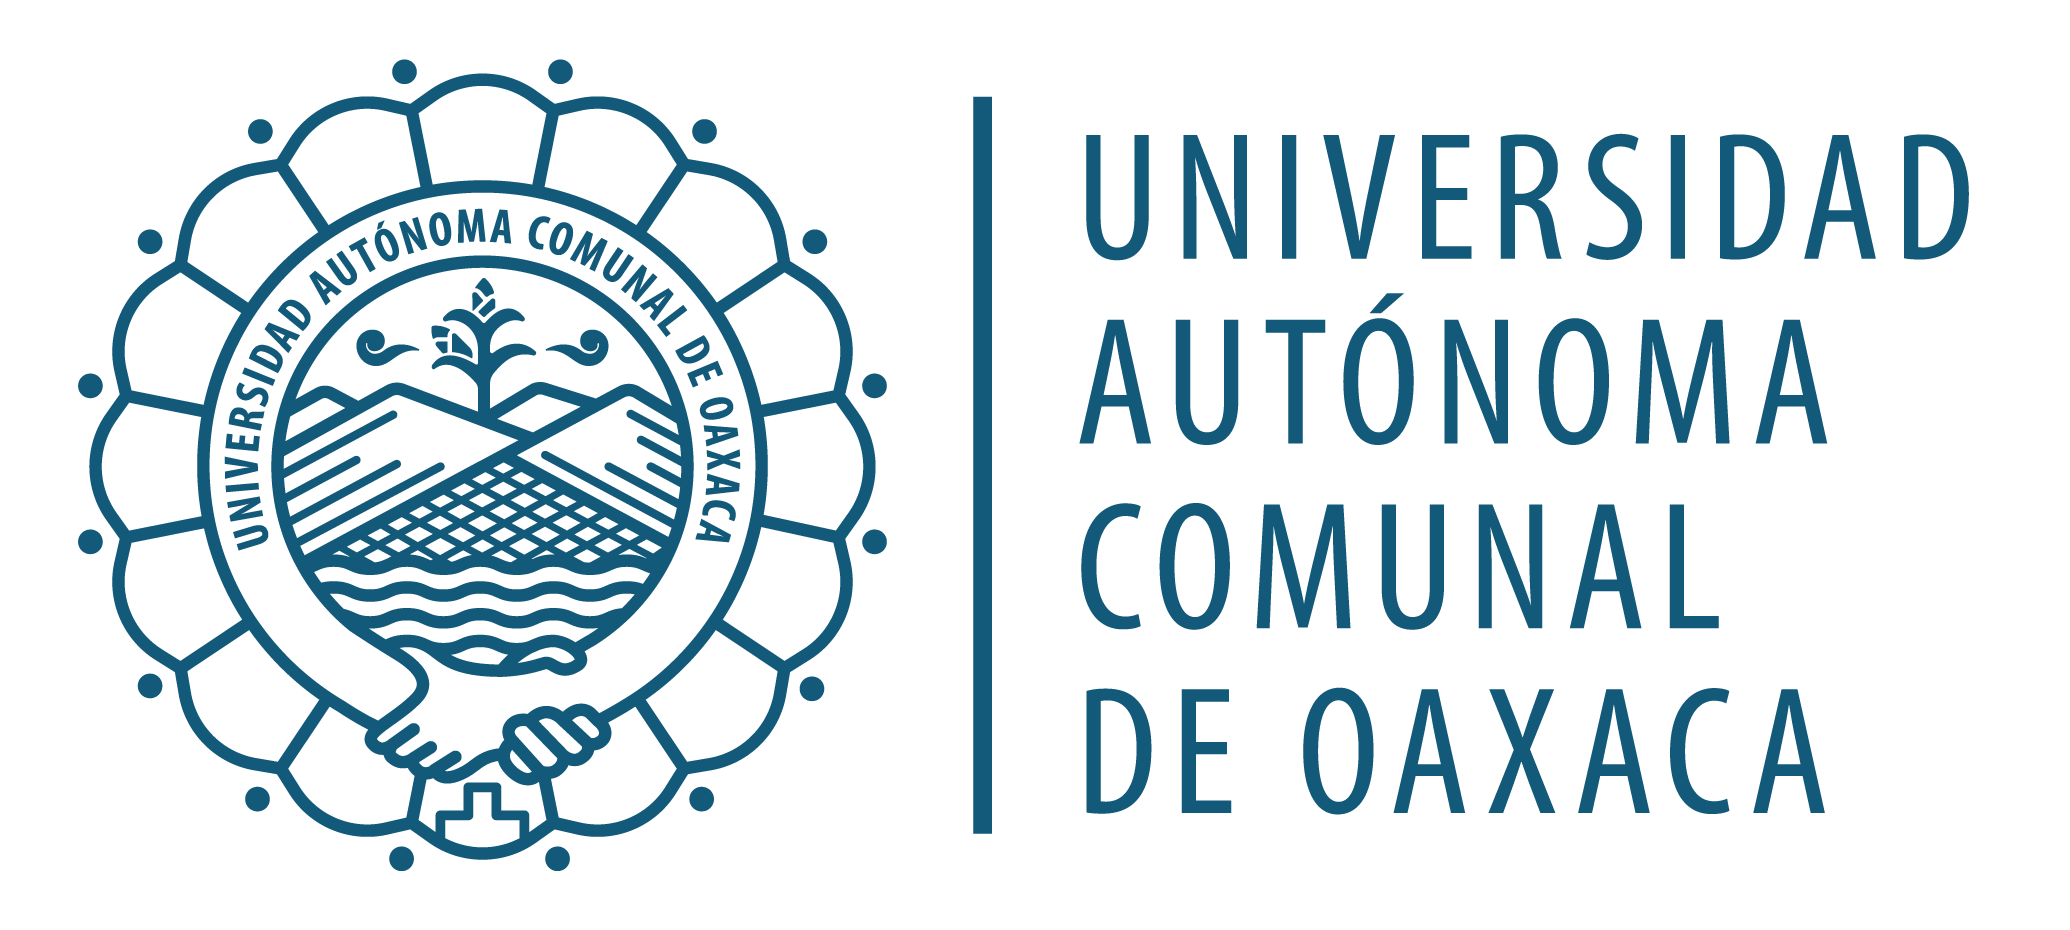 universidad-autonoma-comunal-oaxaca